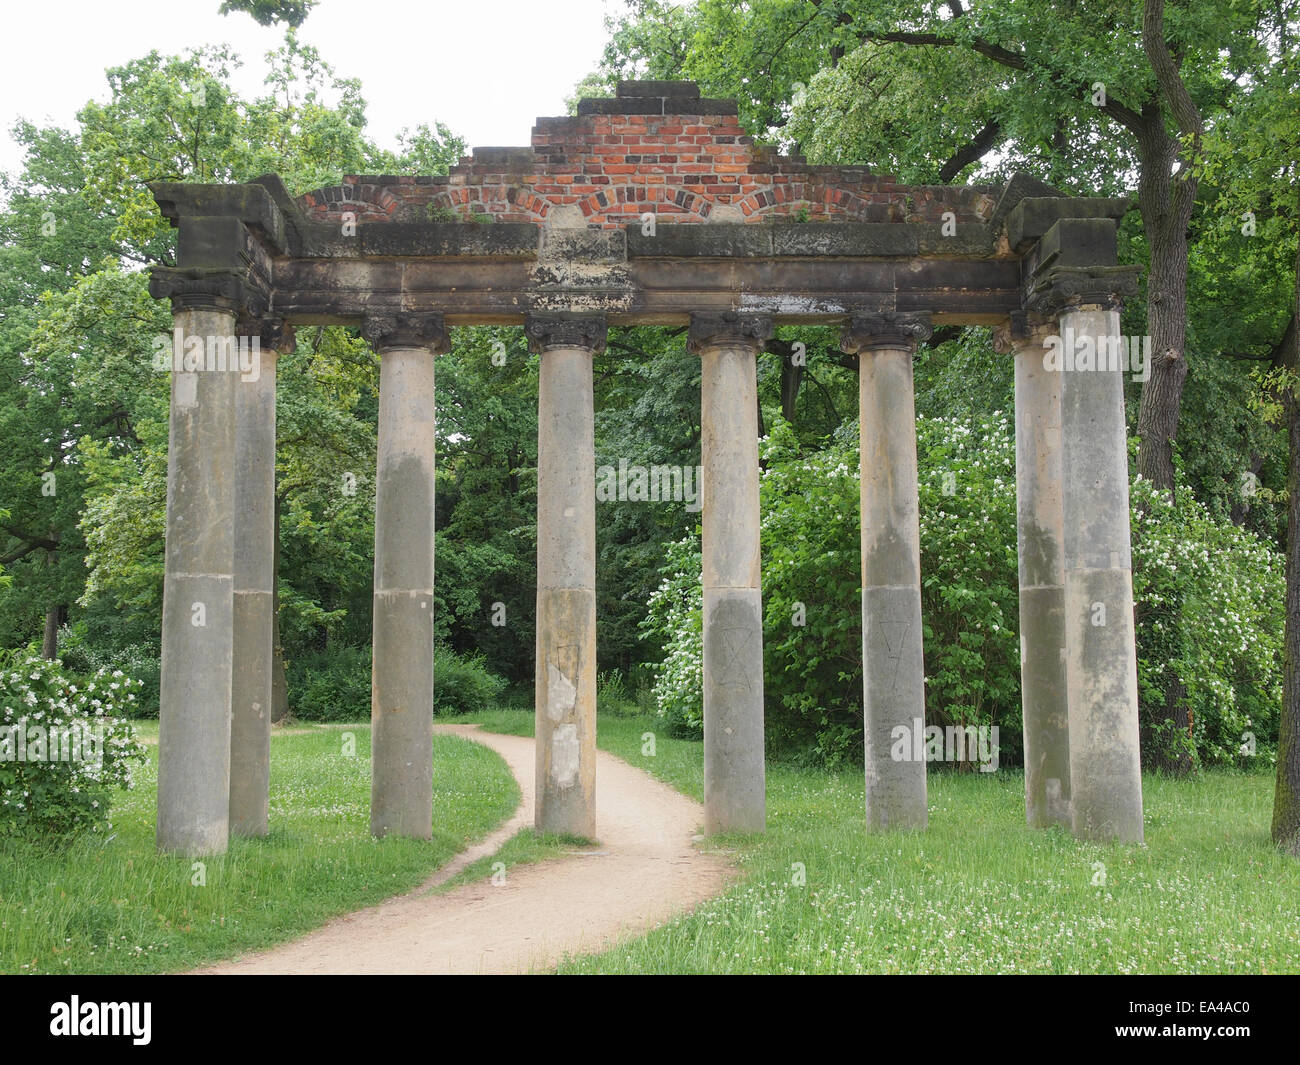 Sieben Saeulen ruins in Dessau Germany Stock Photo